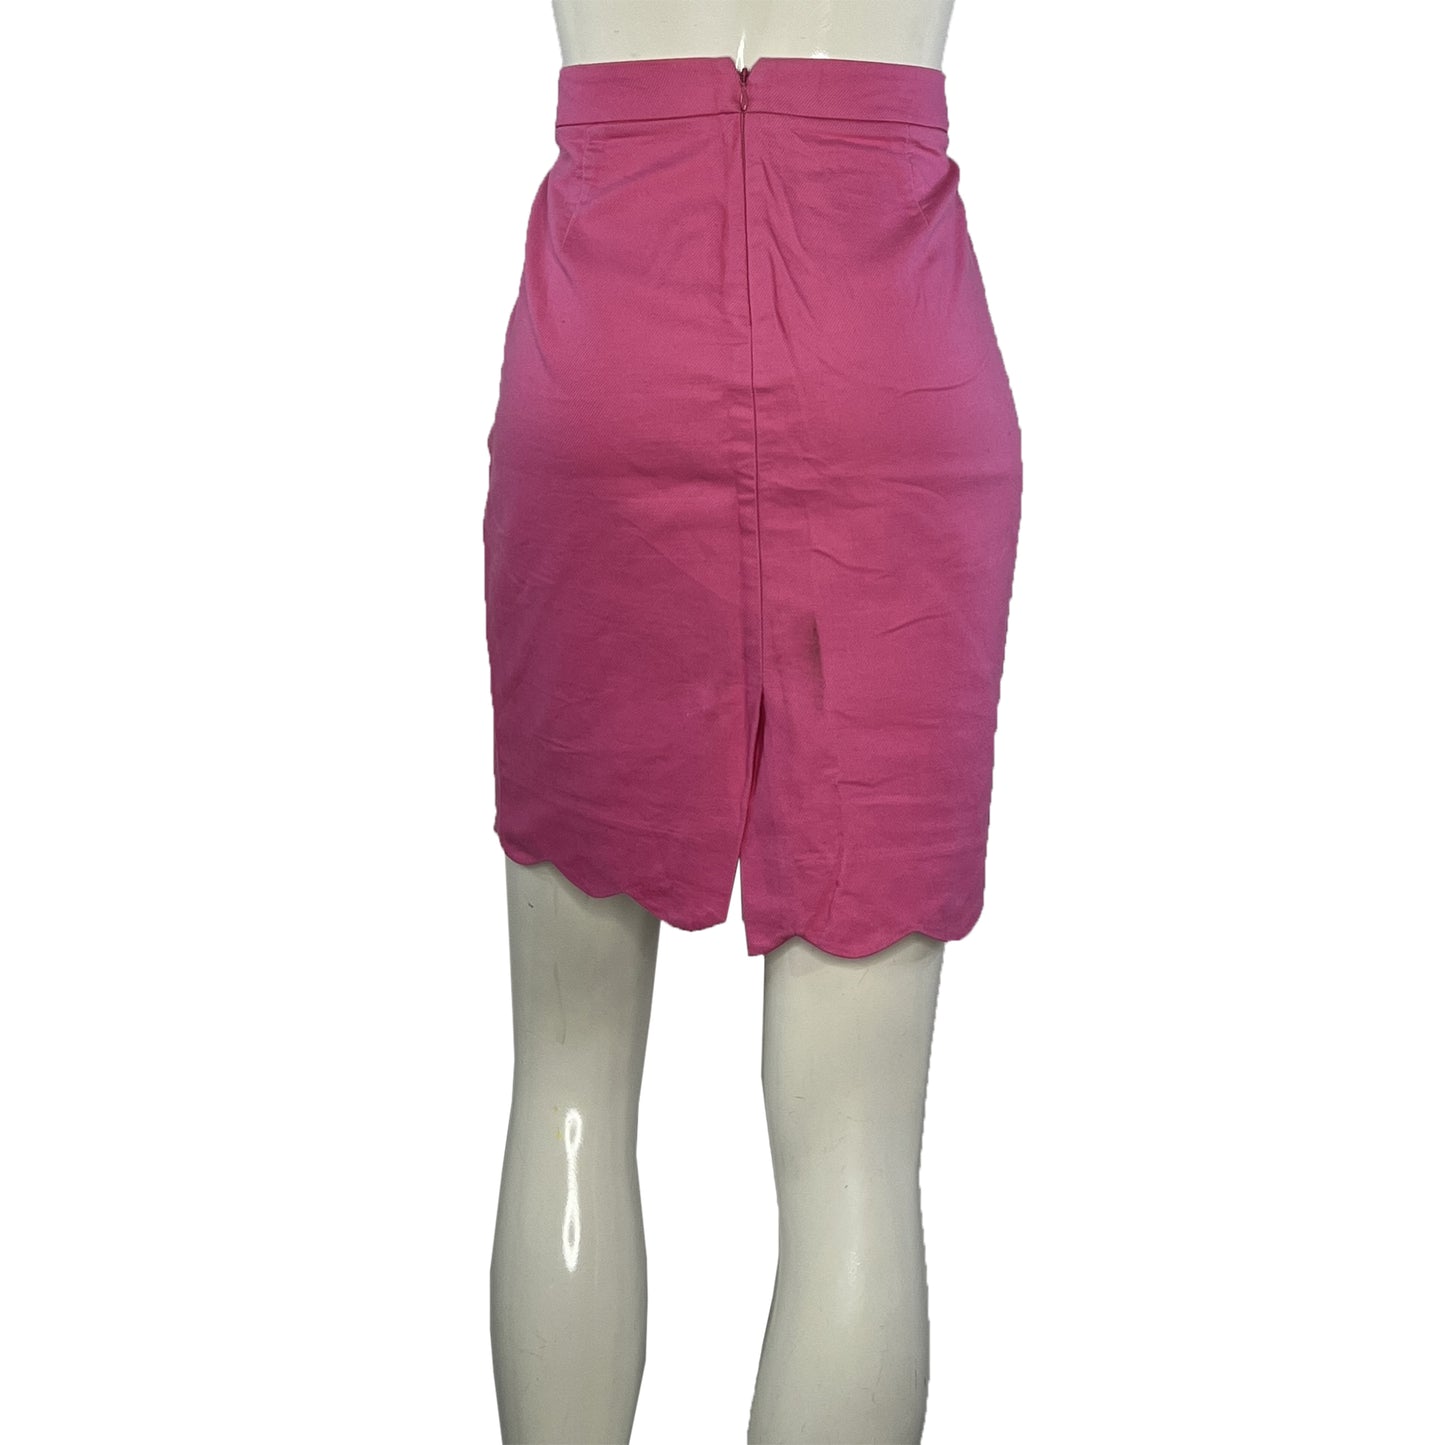 J Crew Pencil Skirt Above-Knee Scallop Detail Barbie-Pink Size 4 SKU 000417